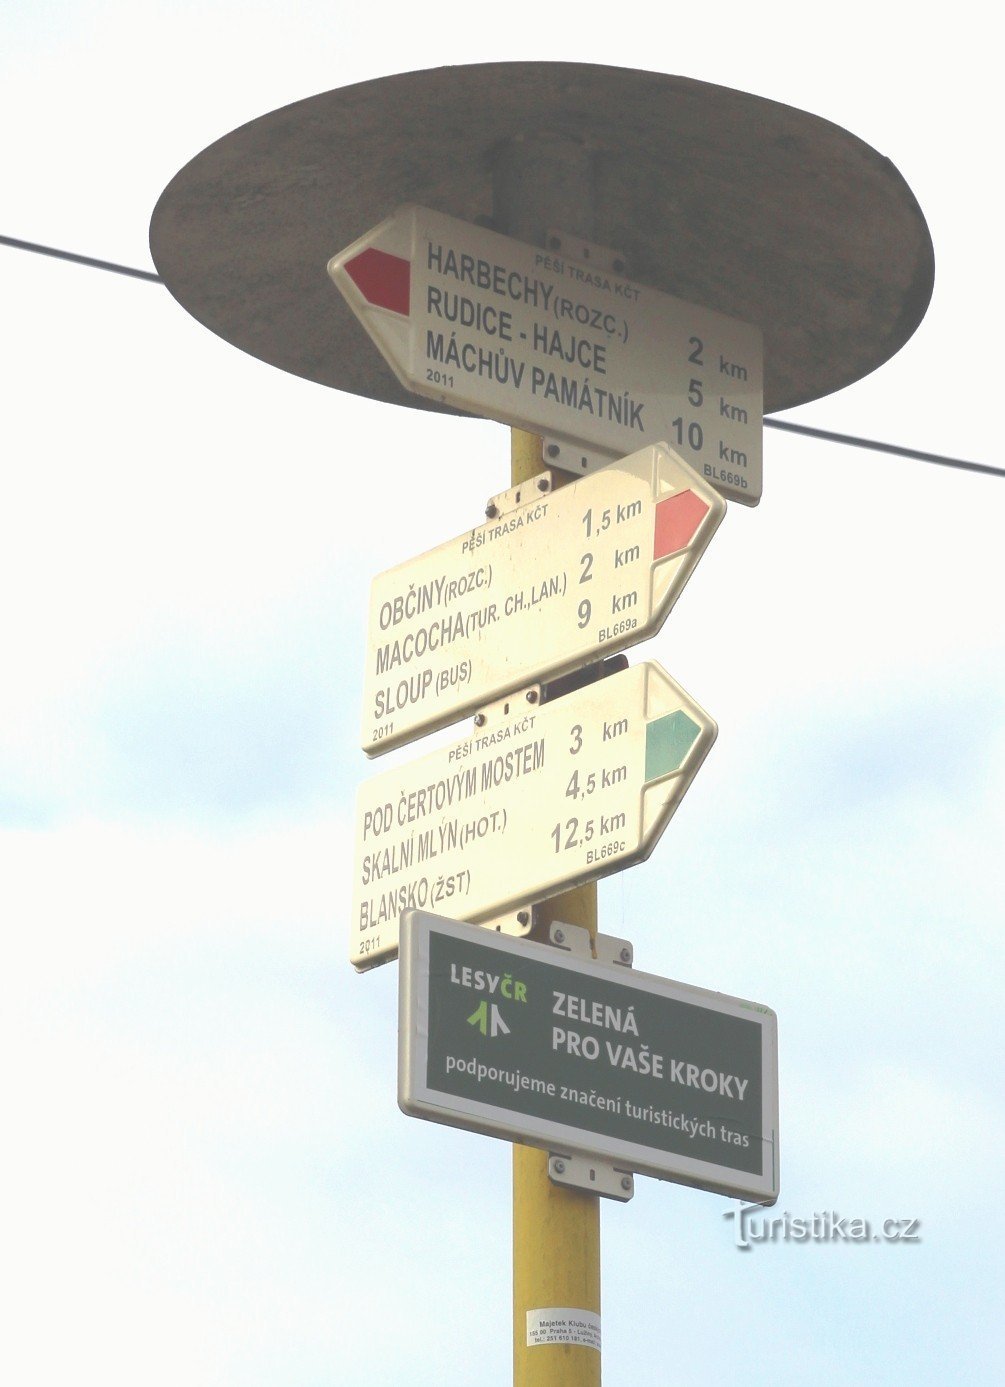 Vilémovice tourist crossroads